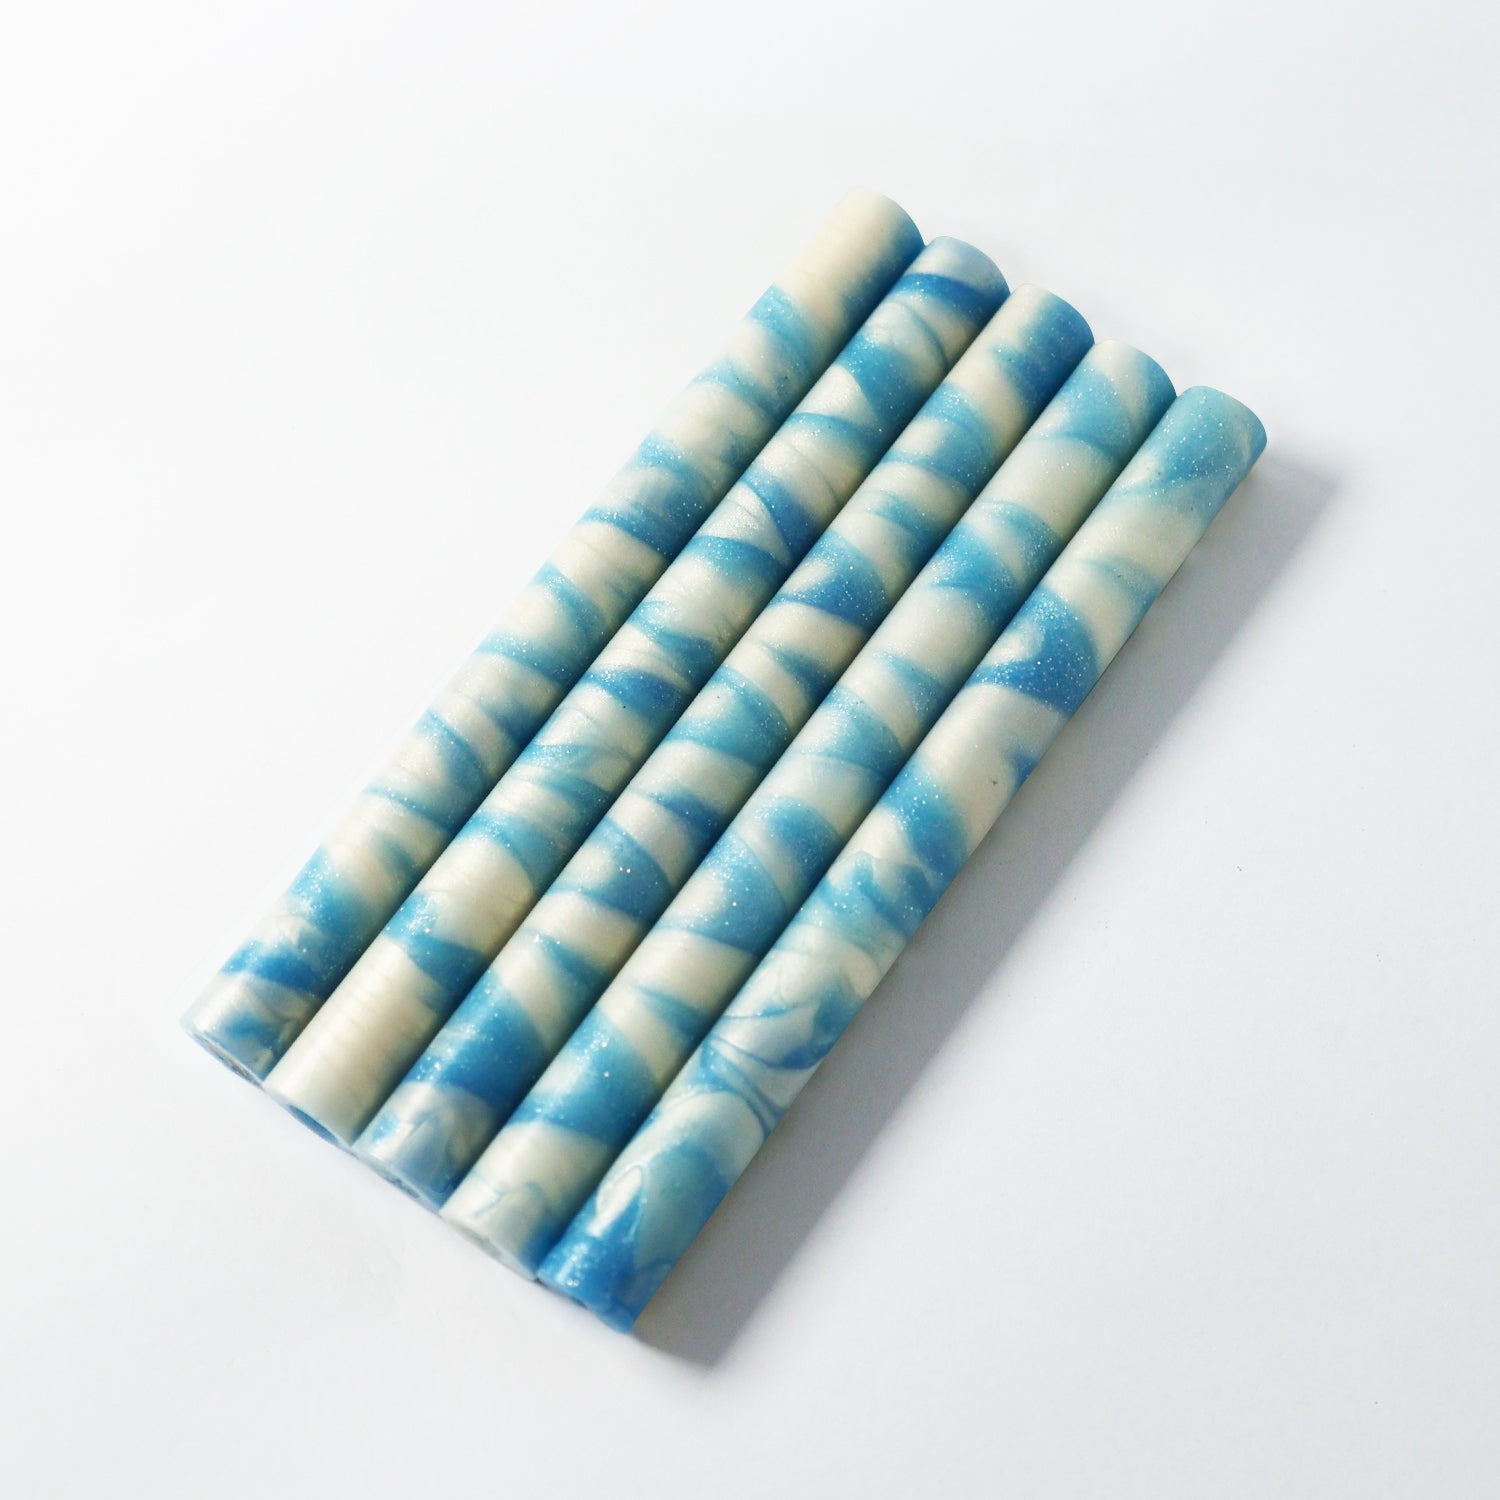 Dreamy Mixed Color Glue Gun Sealing Wax Stick - Light Blue White